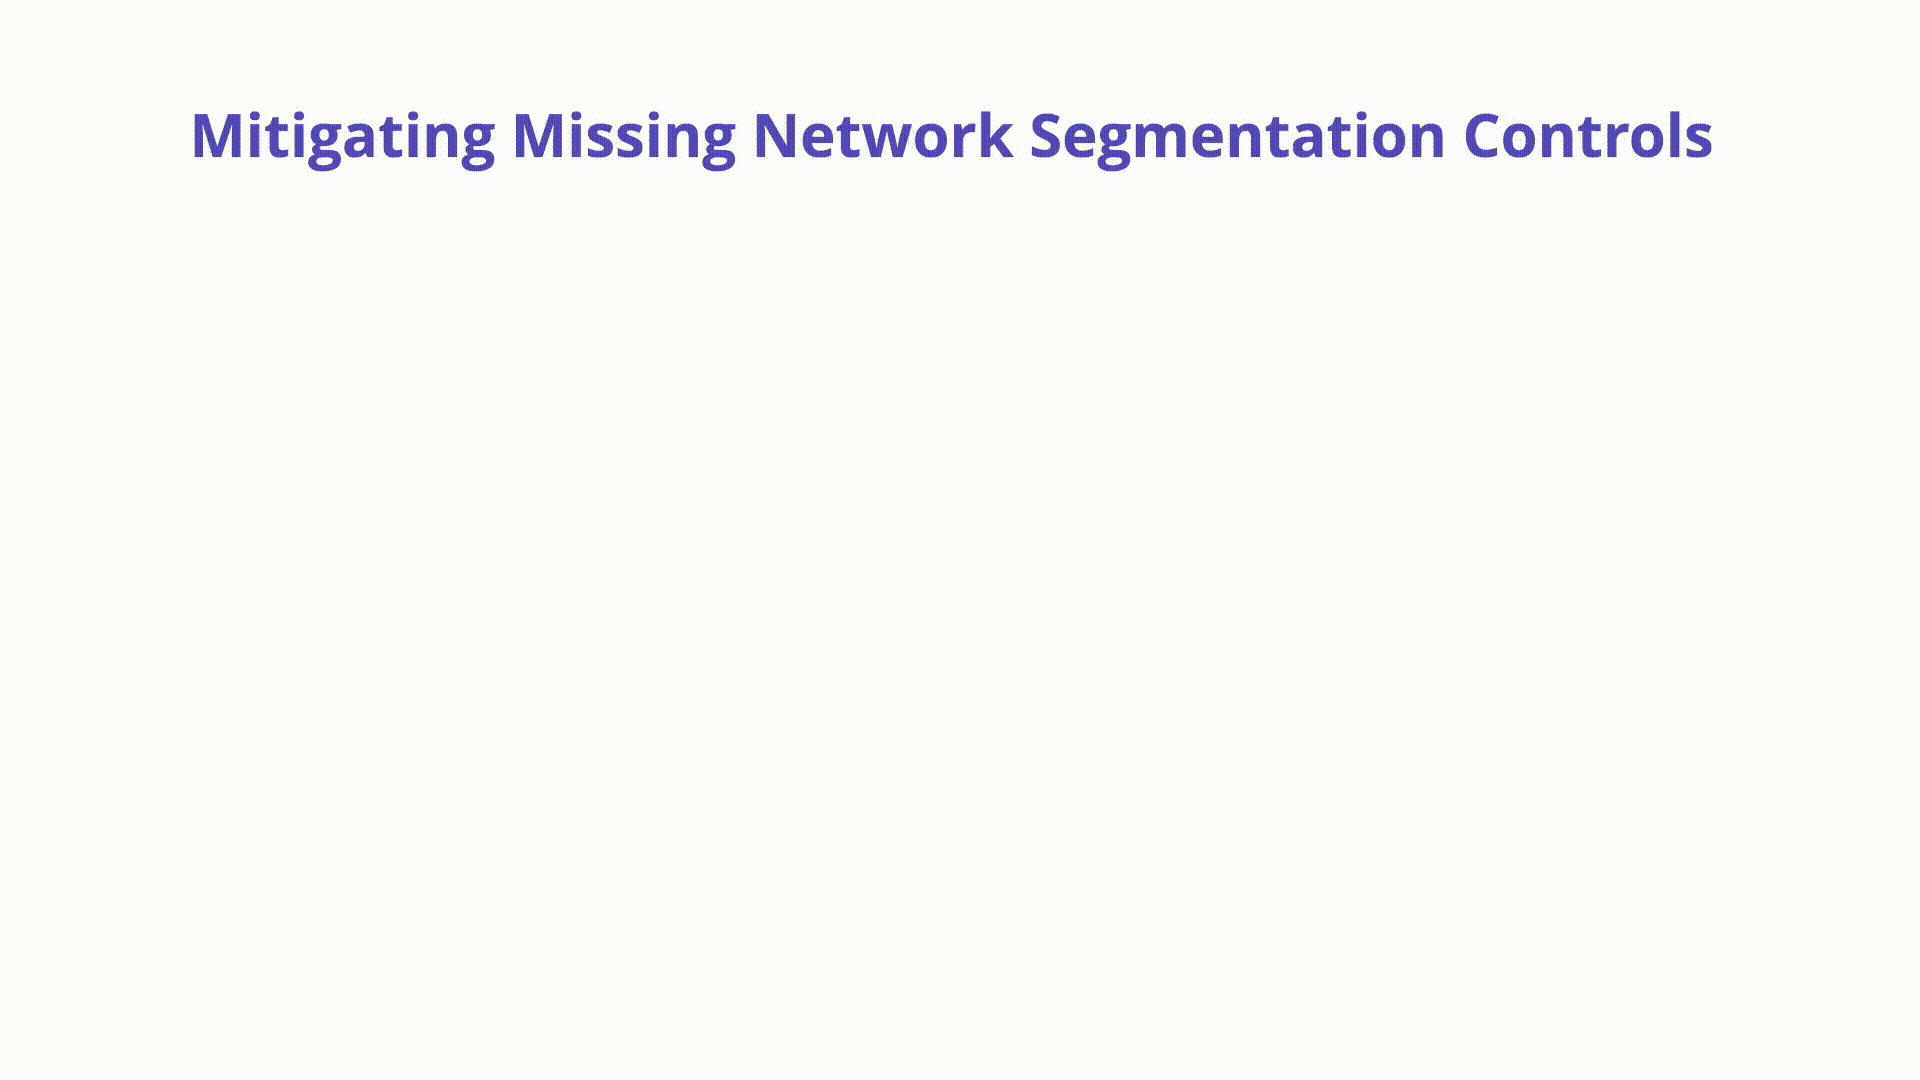 Network Segmentation -
Mitigation